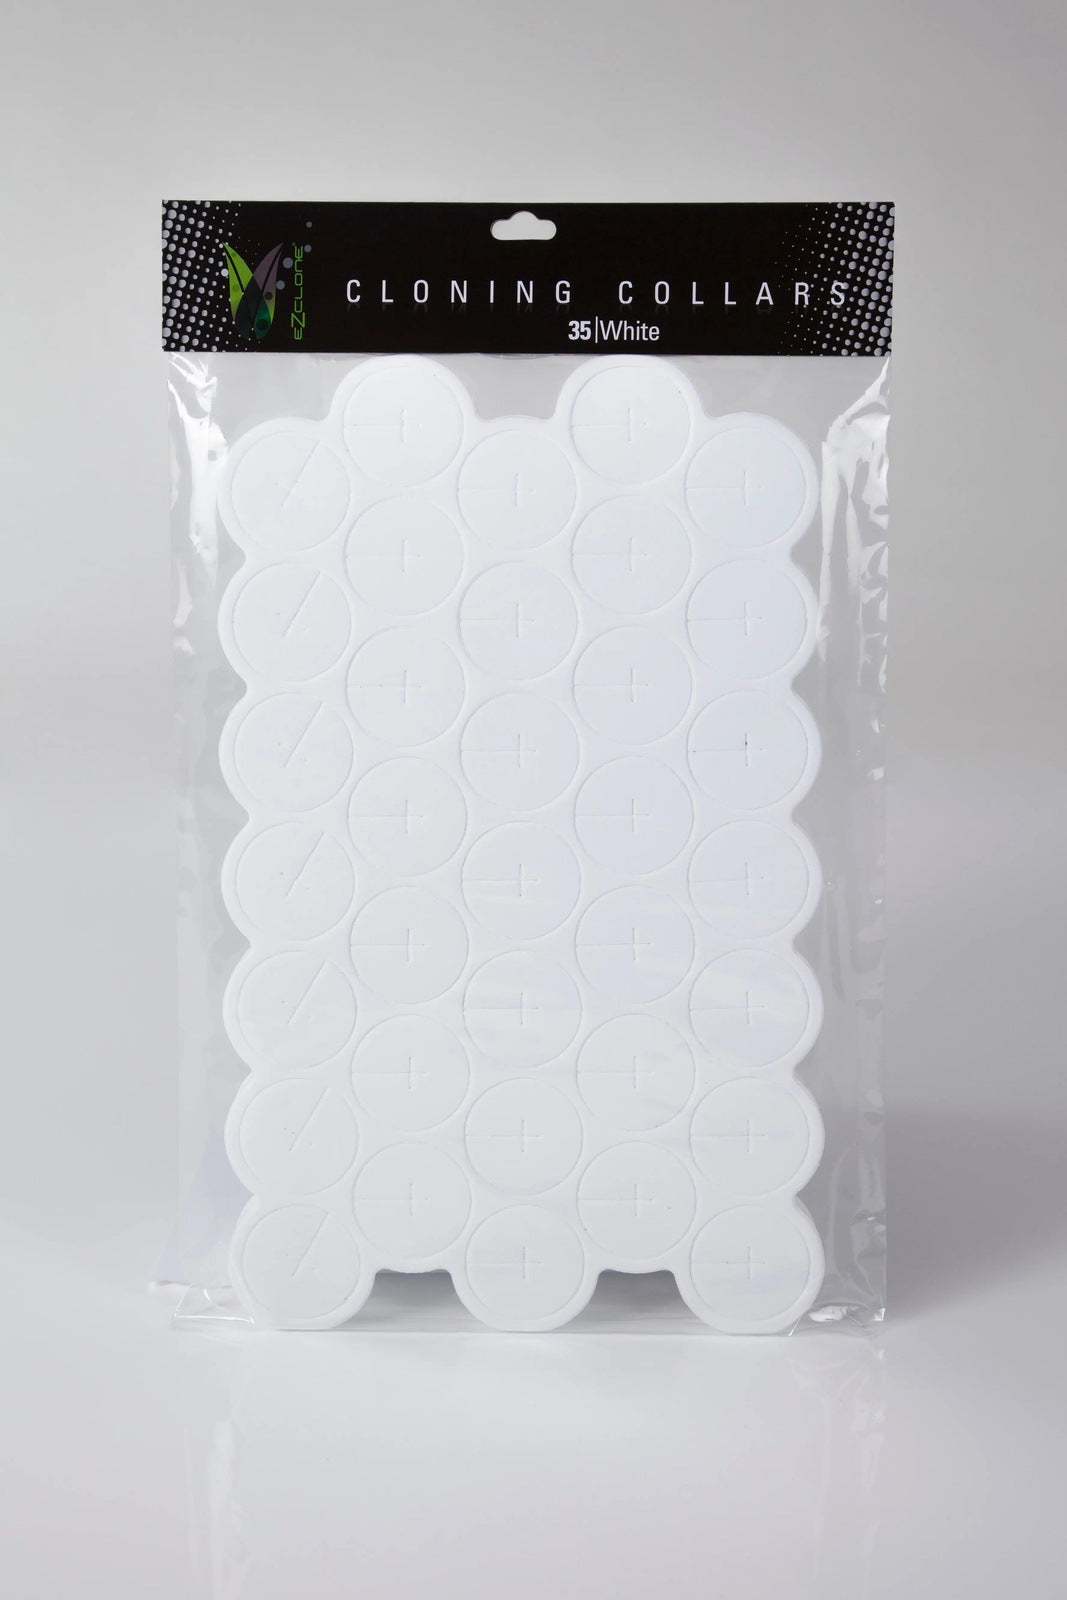 EZ-Clone Soft Cloning Collars, White - Pack of 35